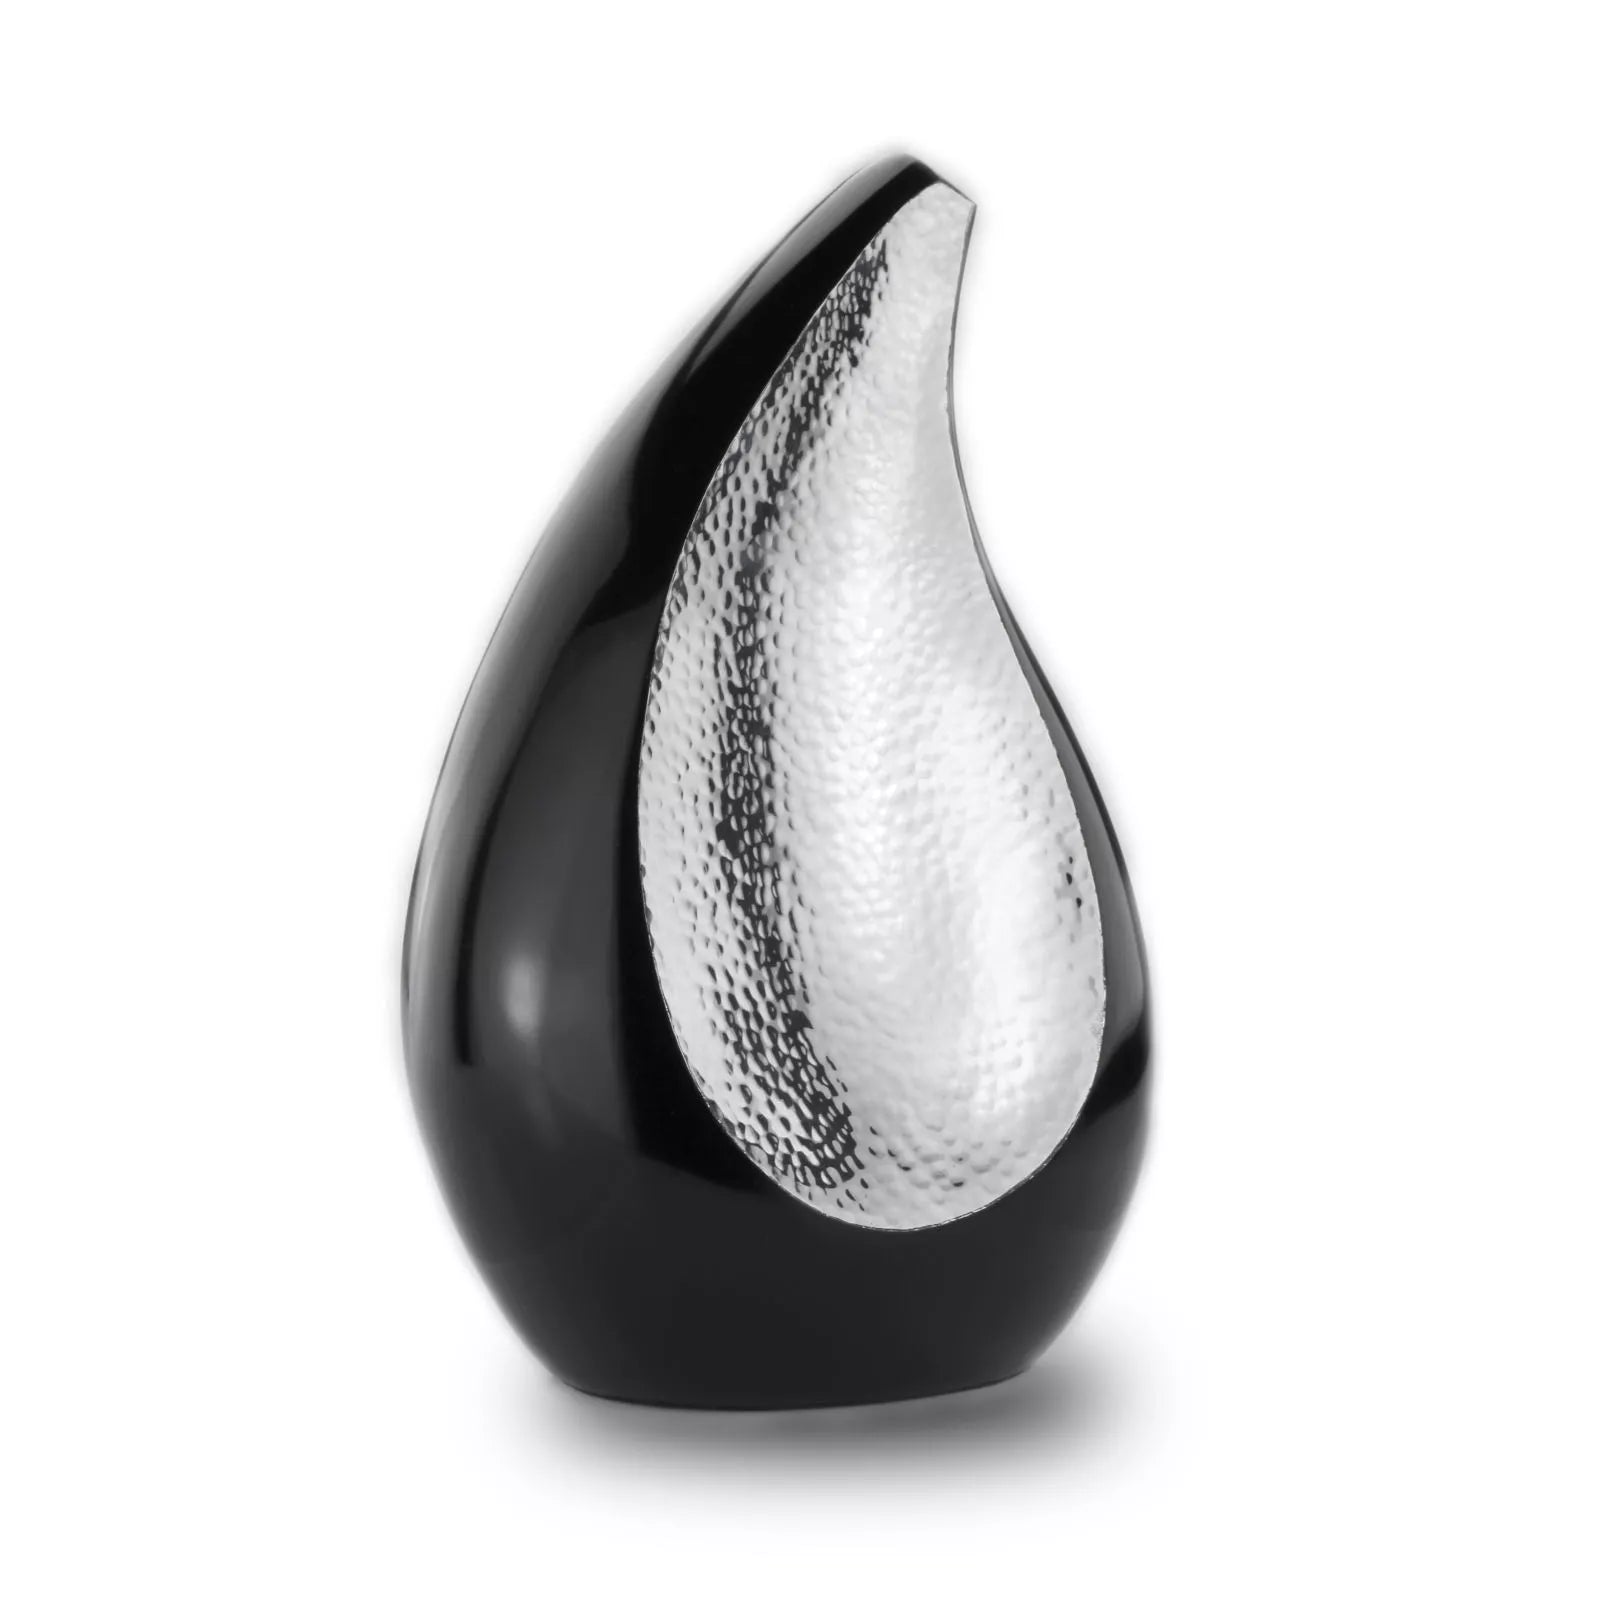 Large urn - Black/silver teardrop